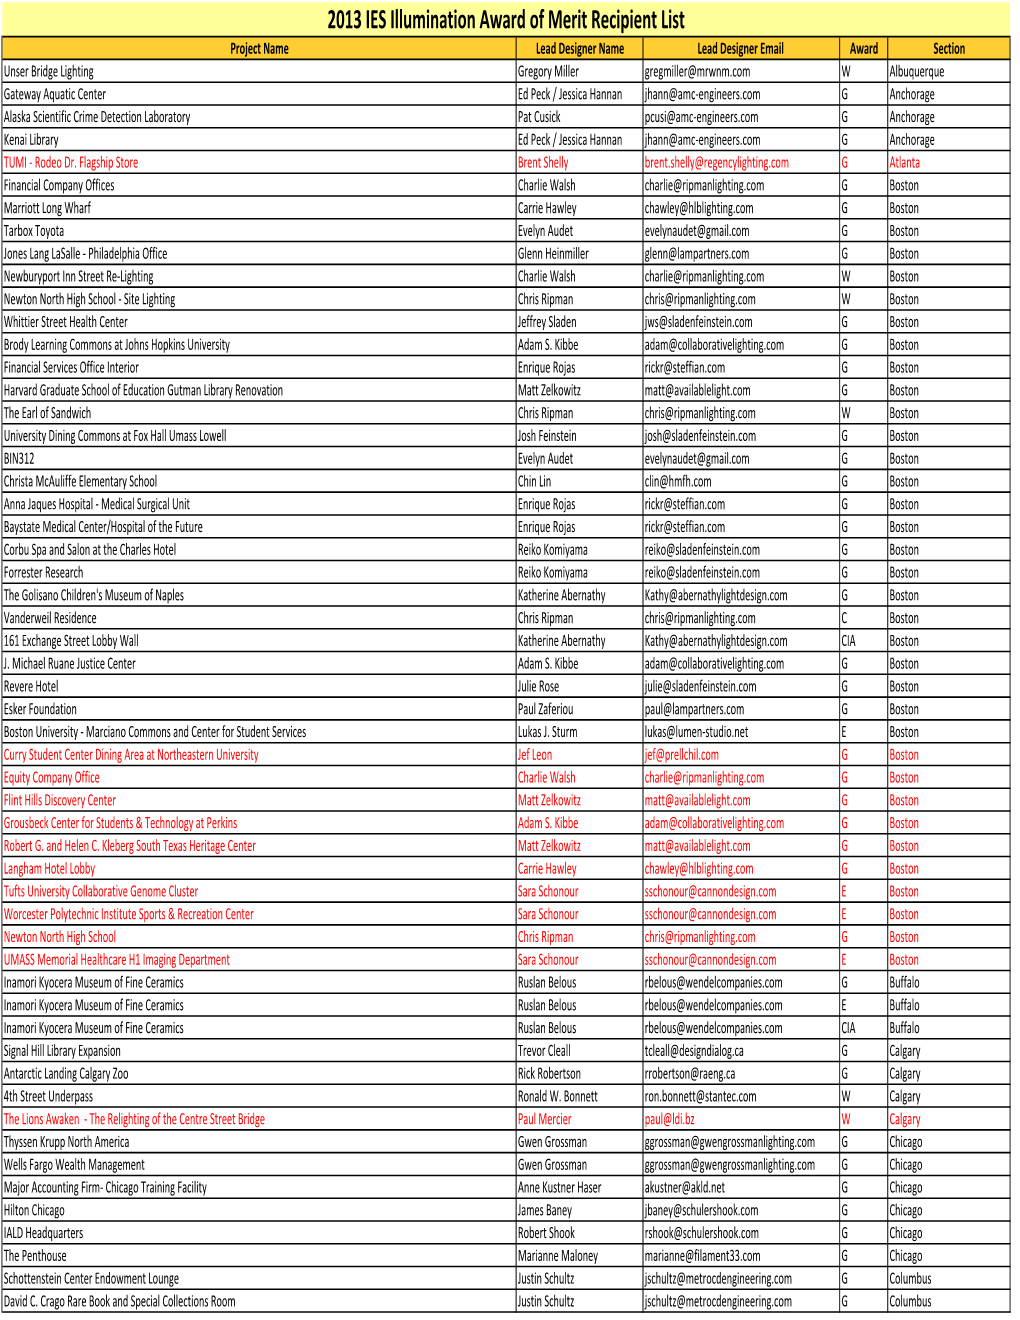 IES IA MERITS 2013 Final List After LFI.Xlsx